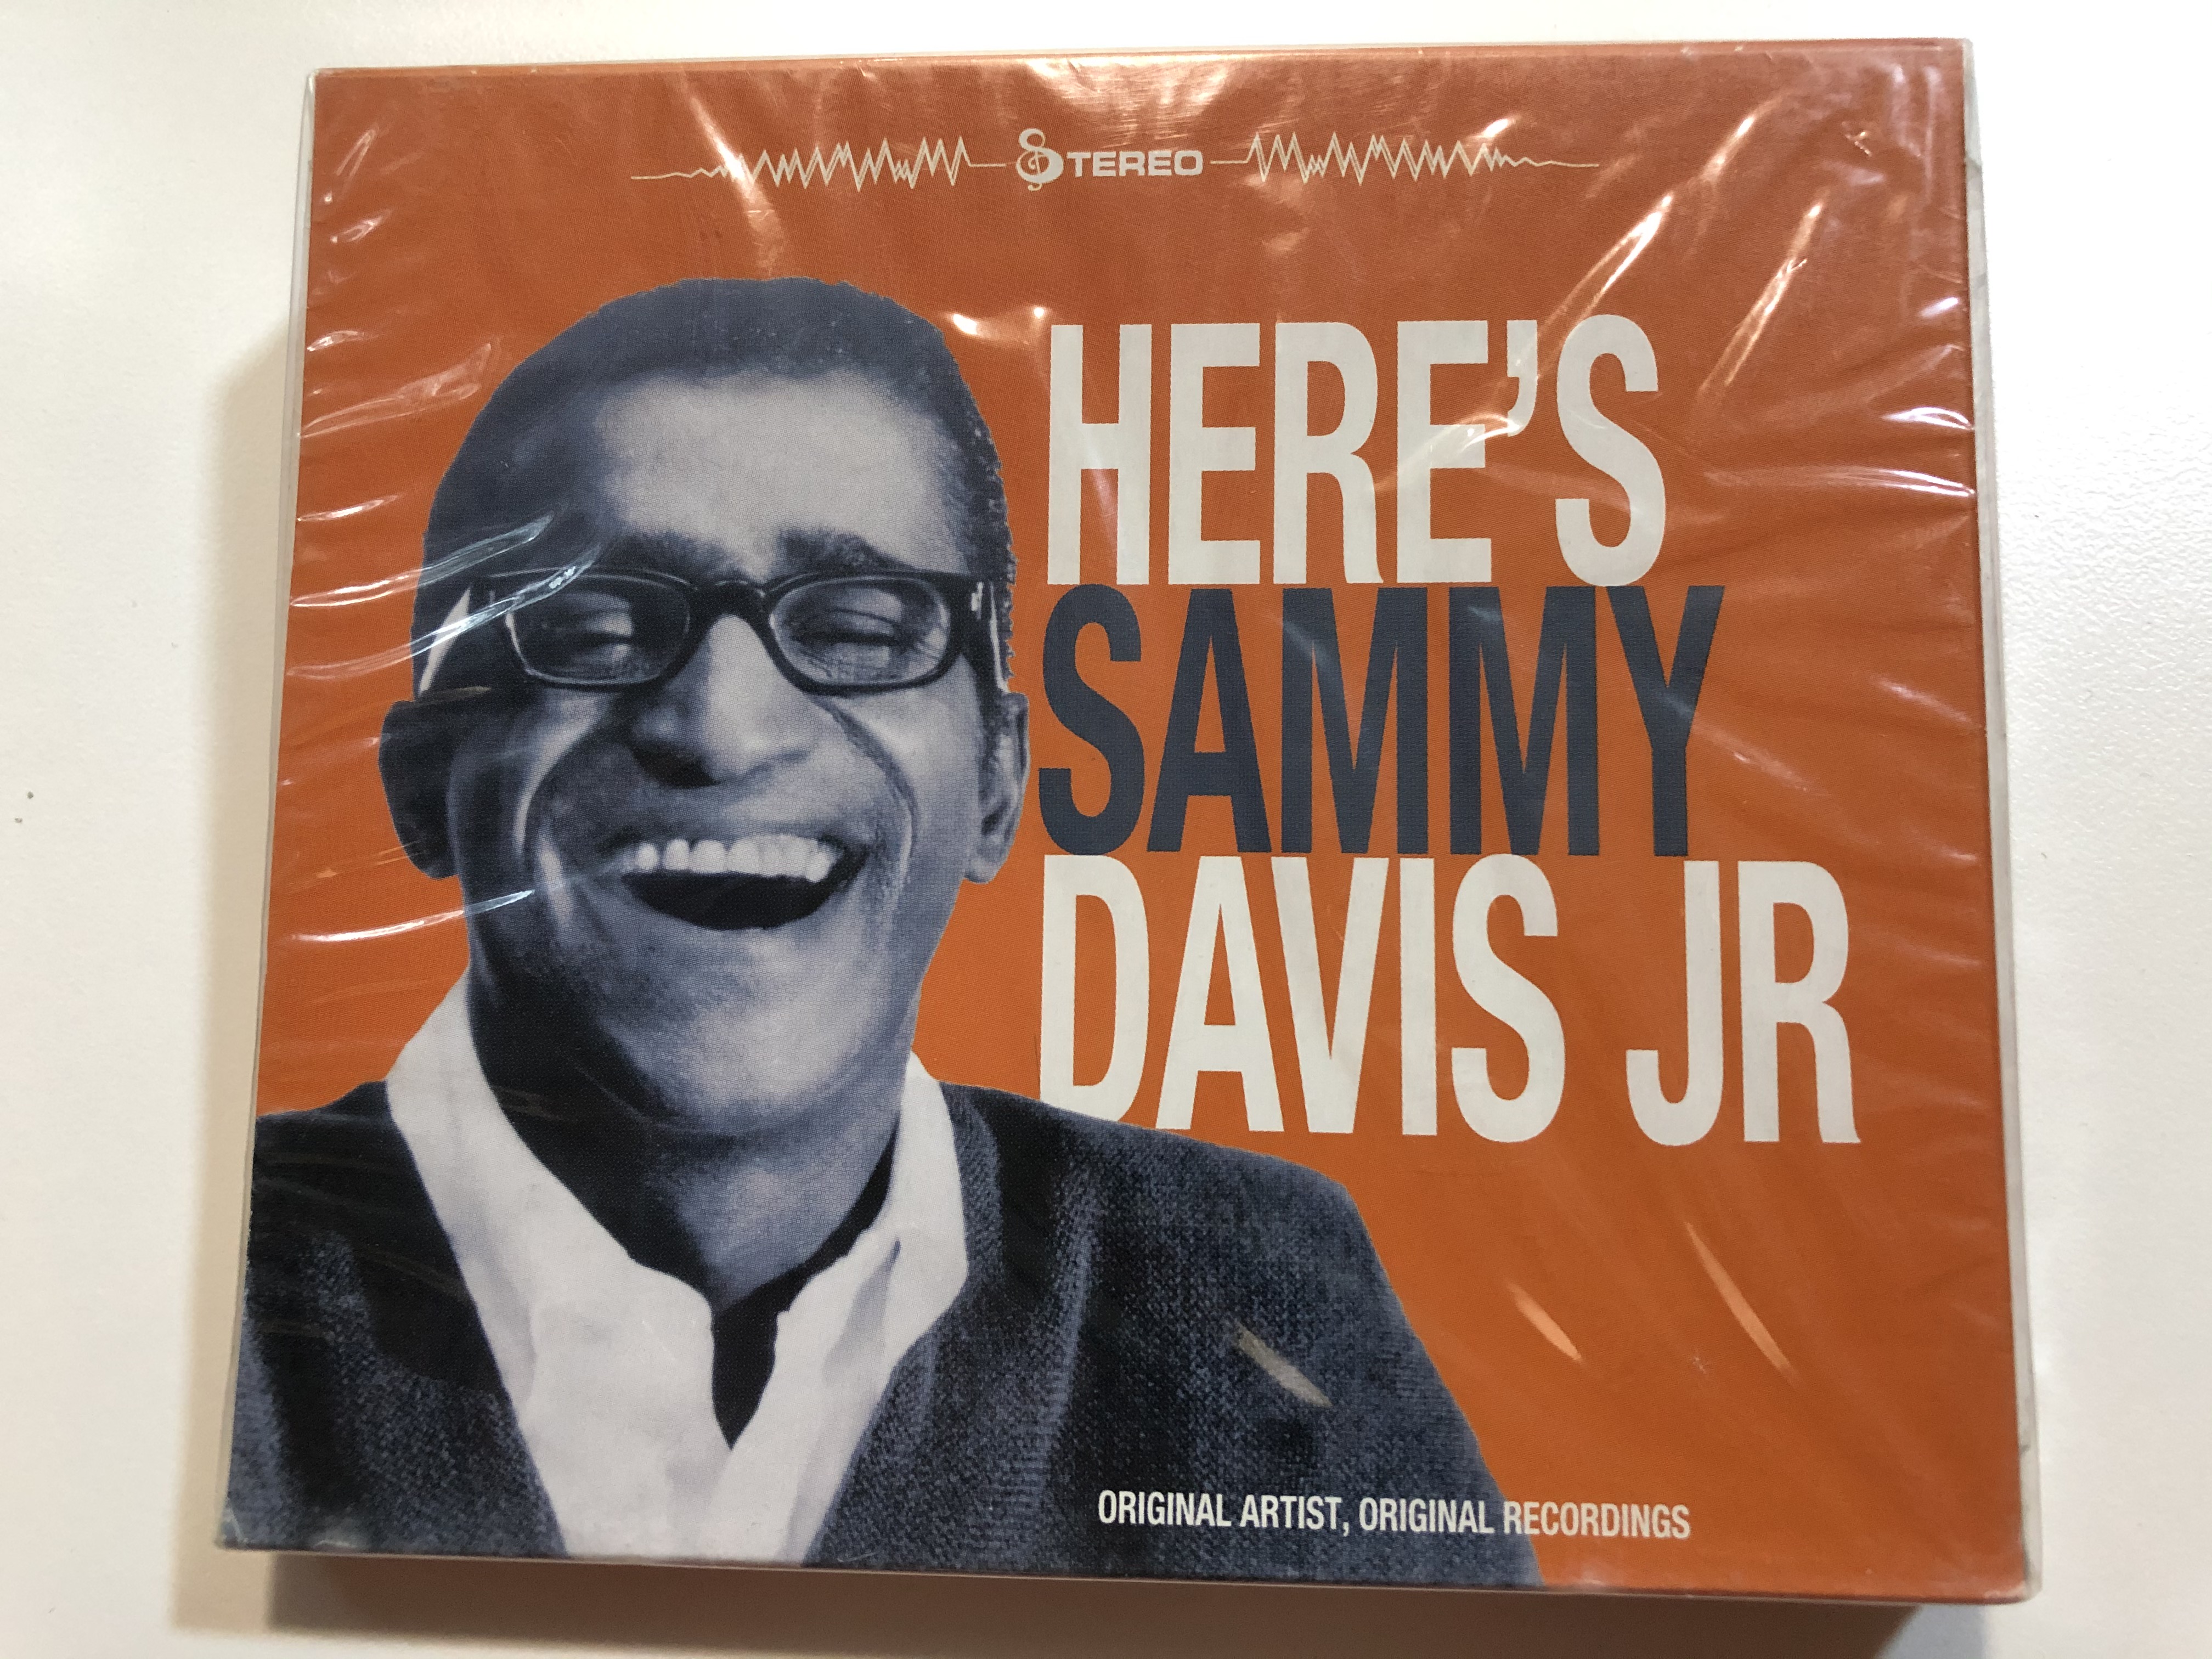 here-s-sammy-davis-jr-original-artist-original-recordings-disky-audio-cd-si-903650-1-.jpg